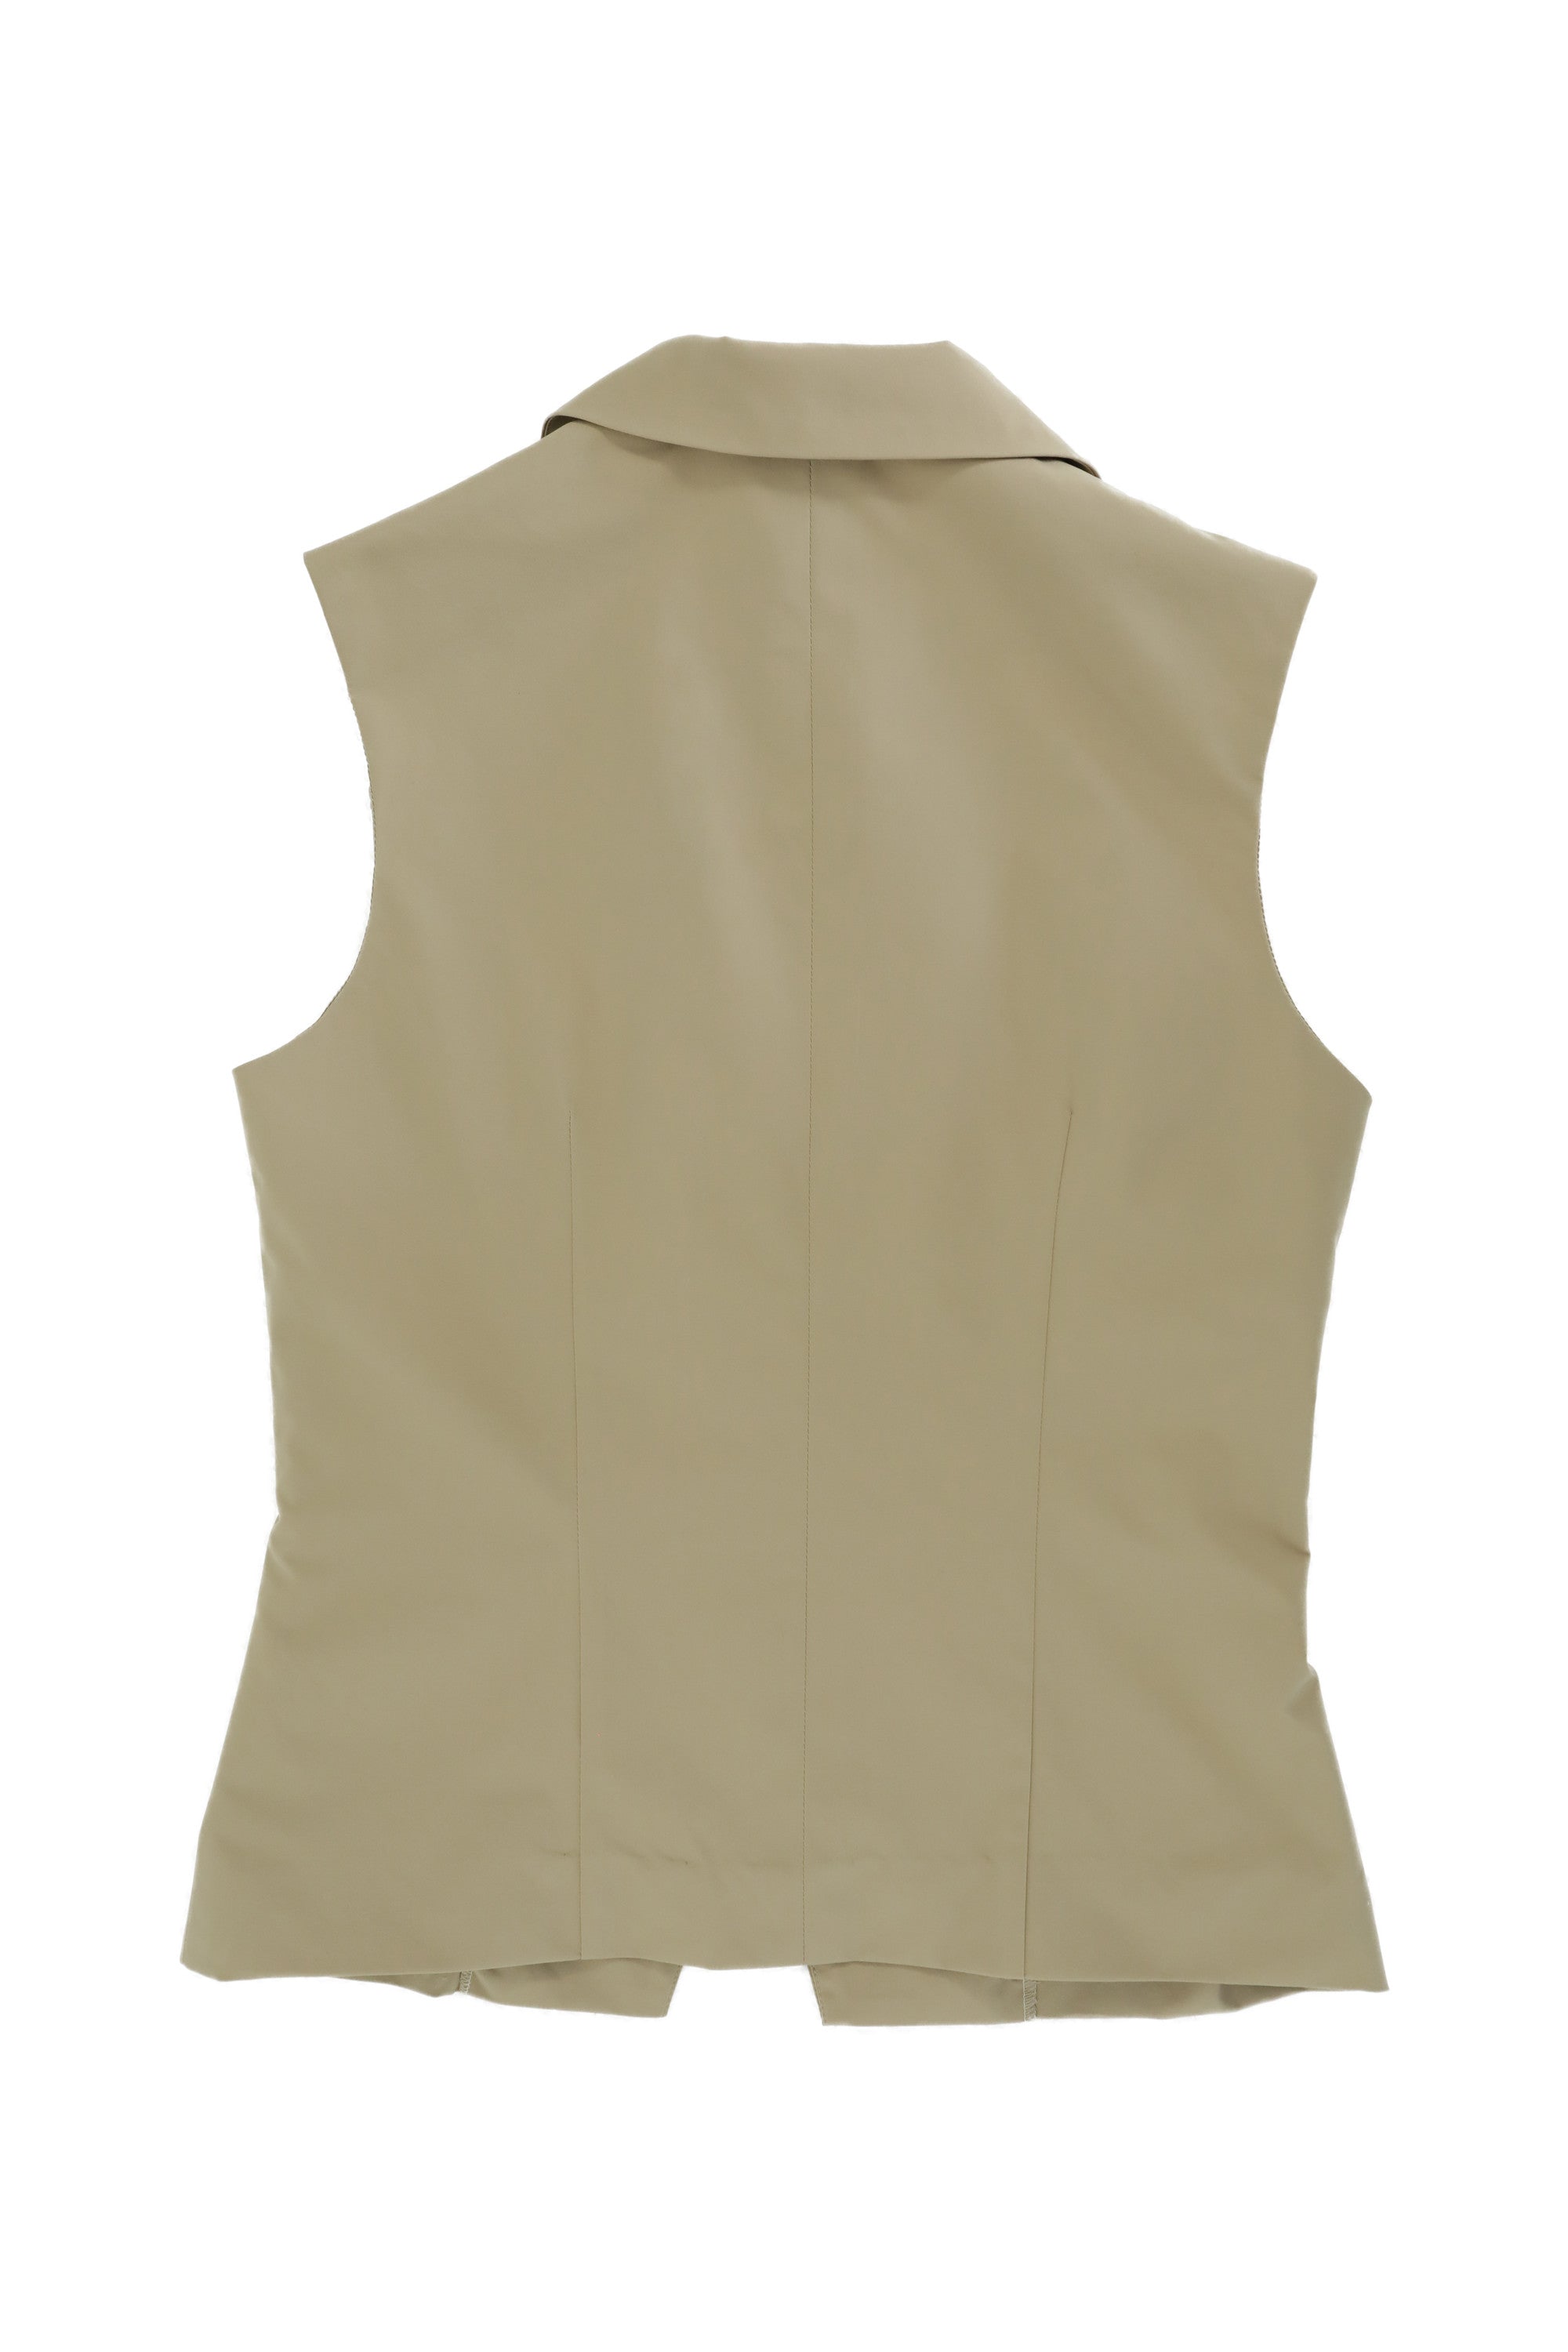 sleeveless jacket / pleats skirt co-ords